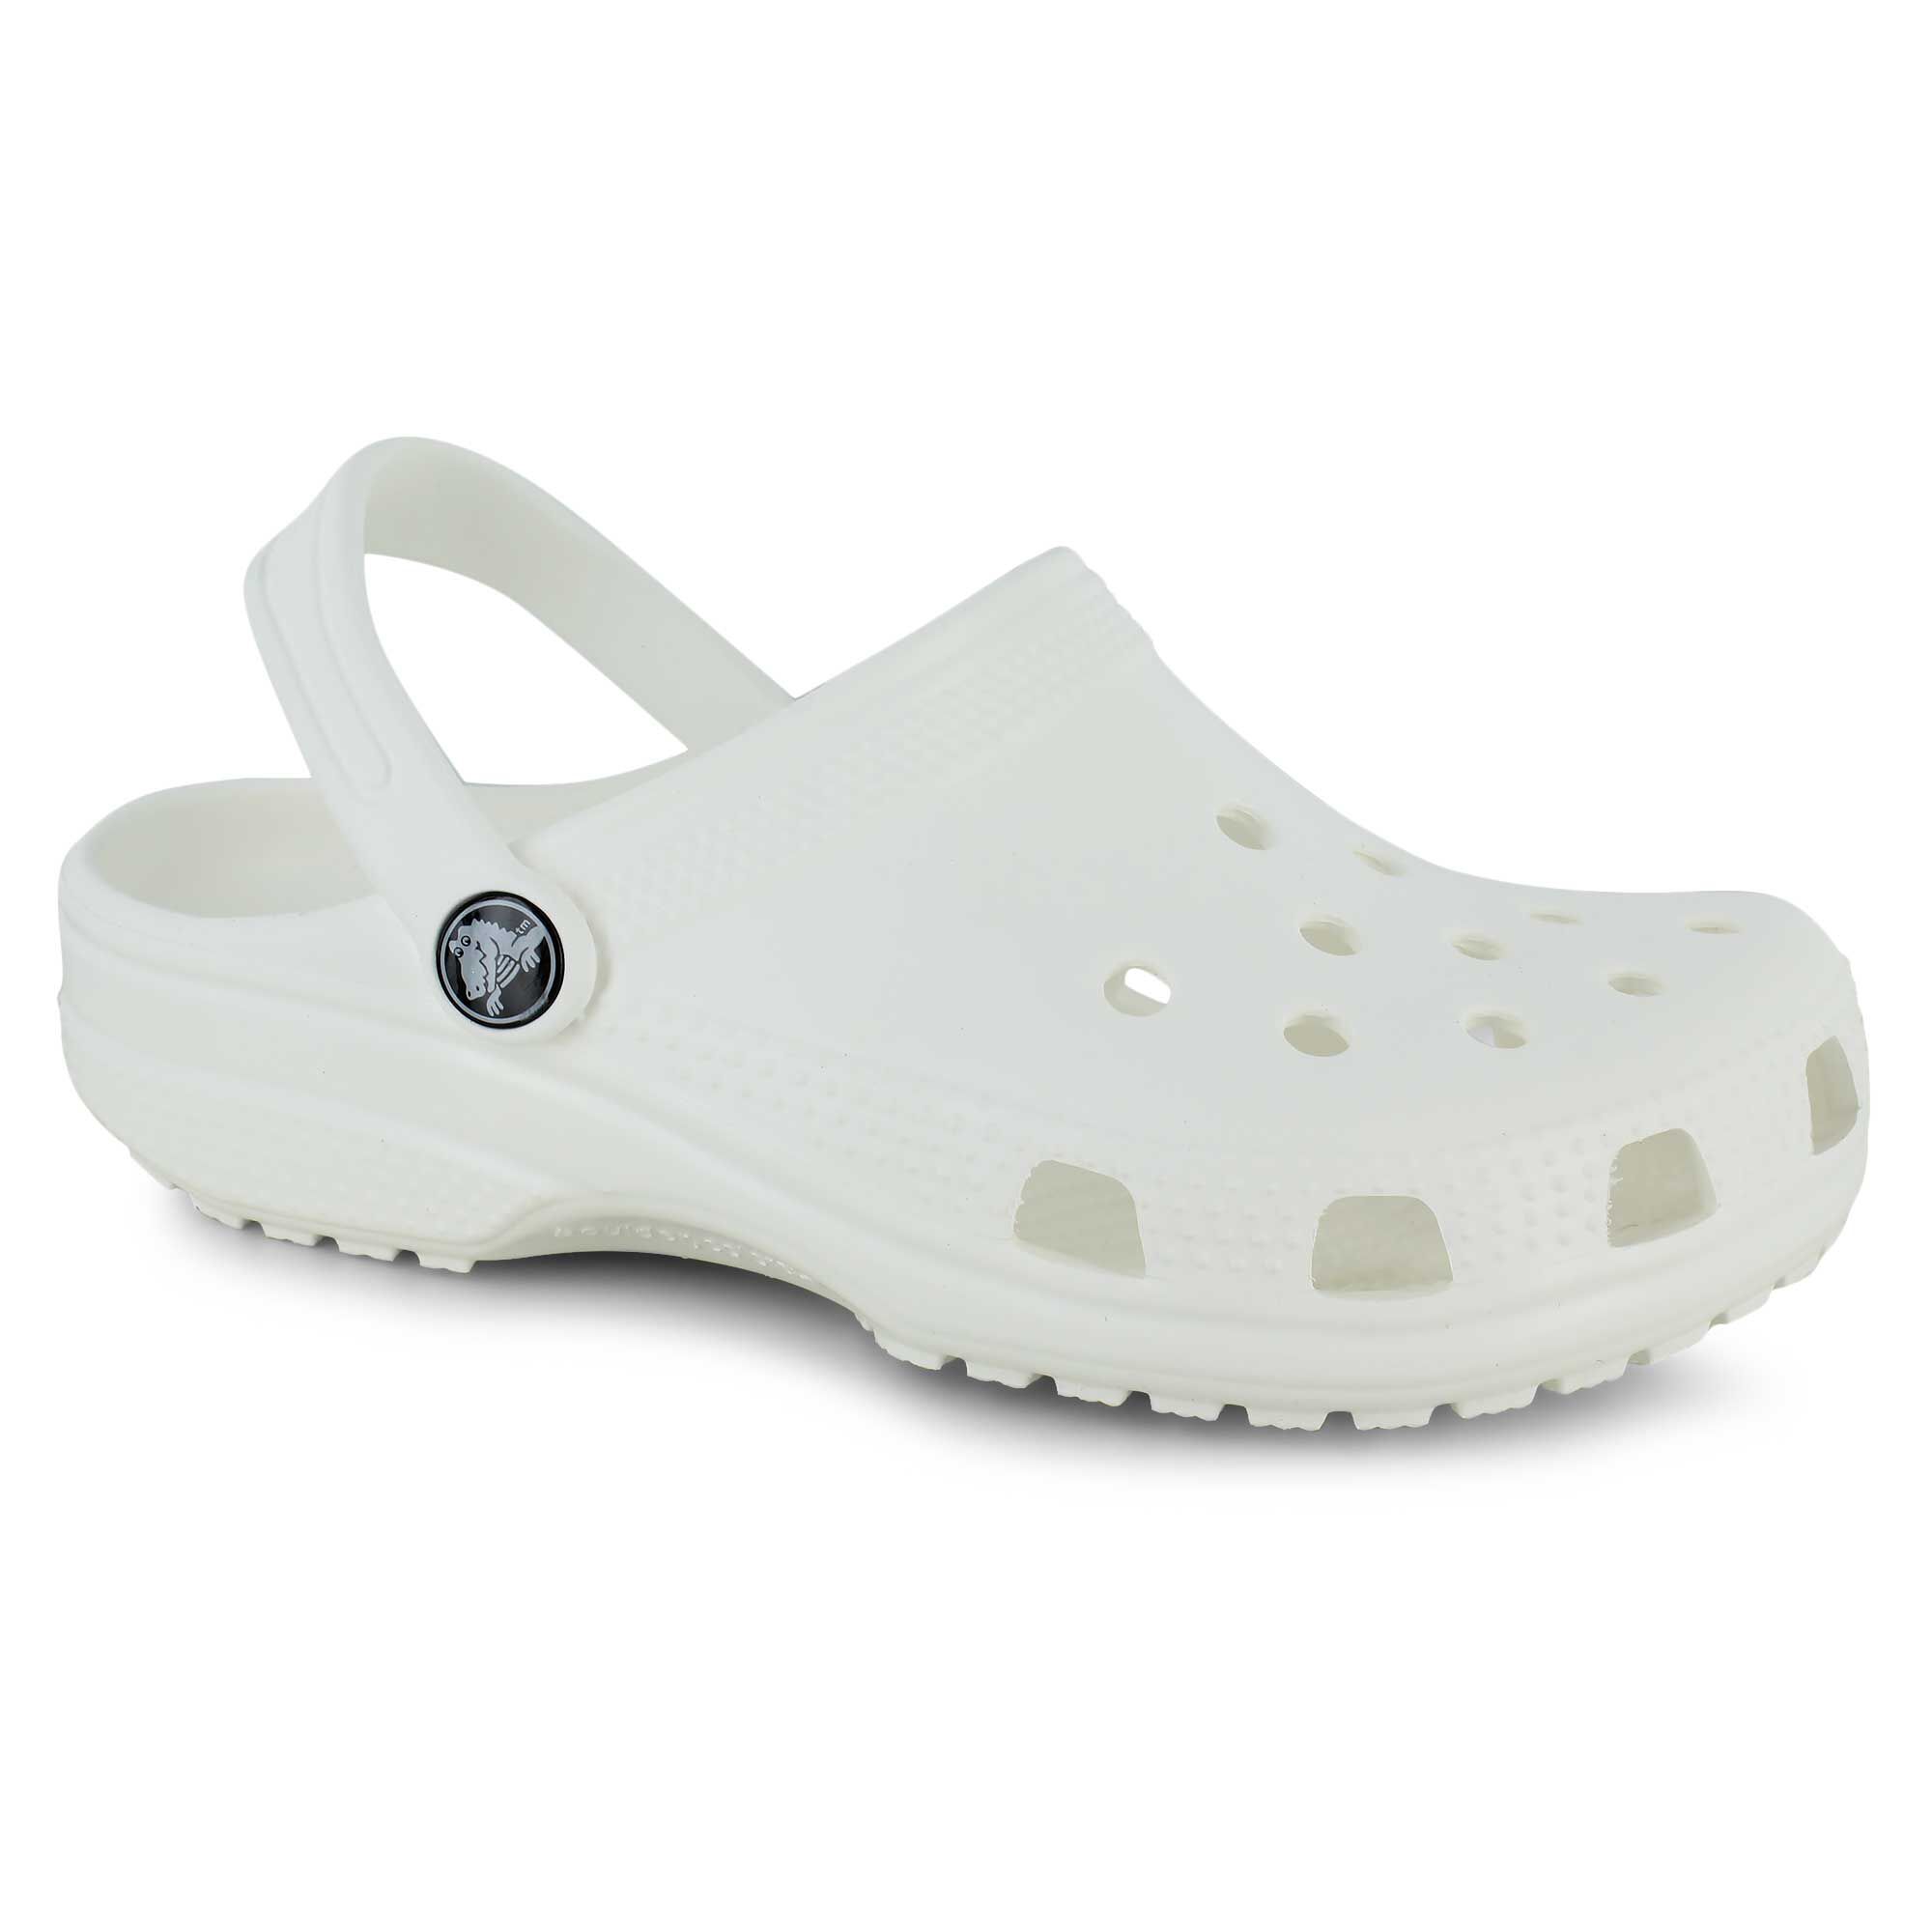 the shoe department crocs